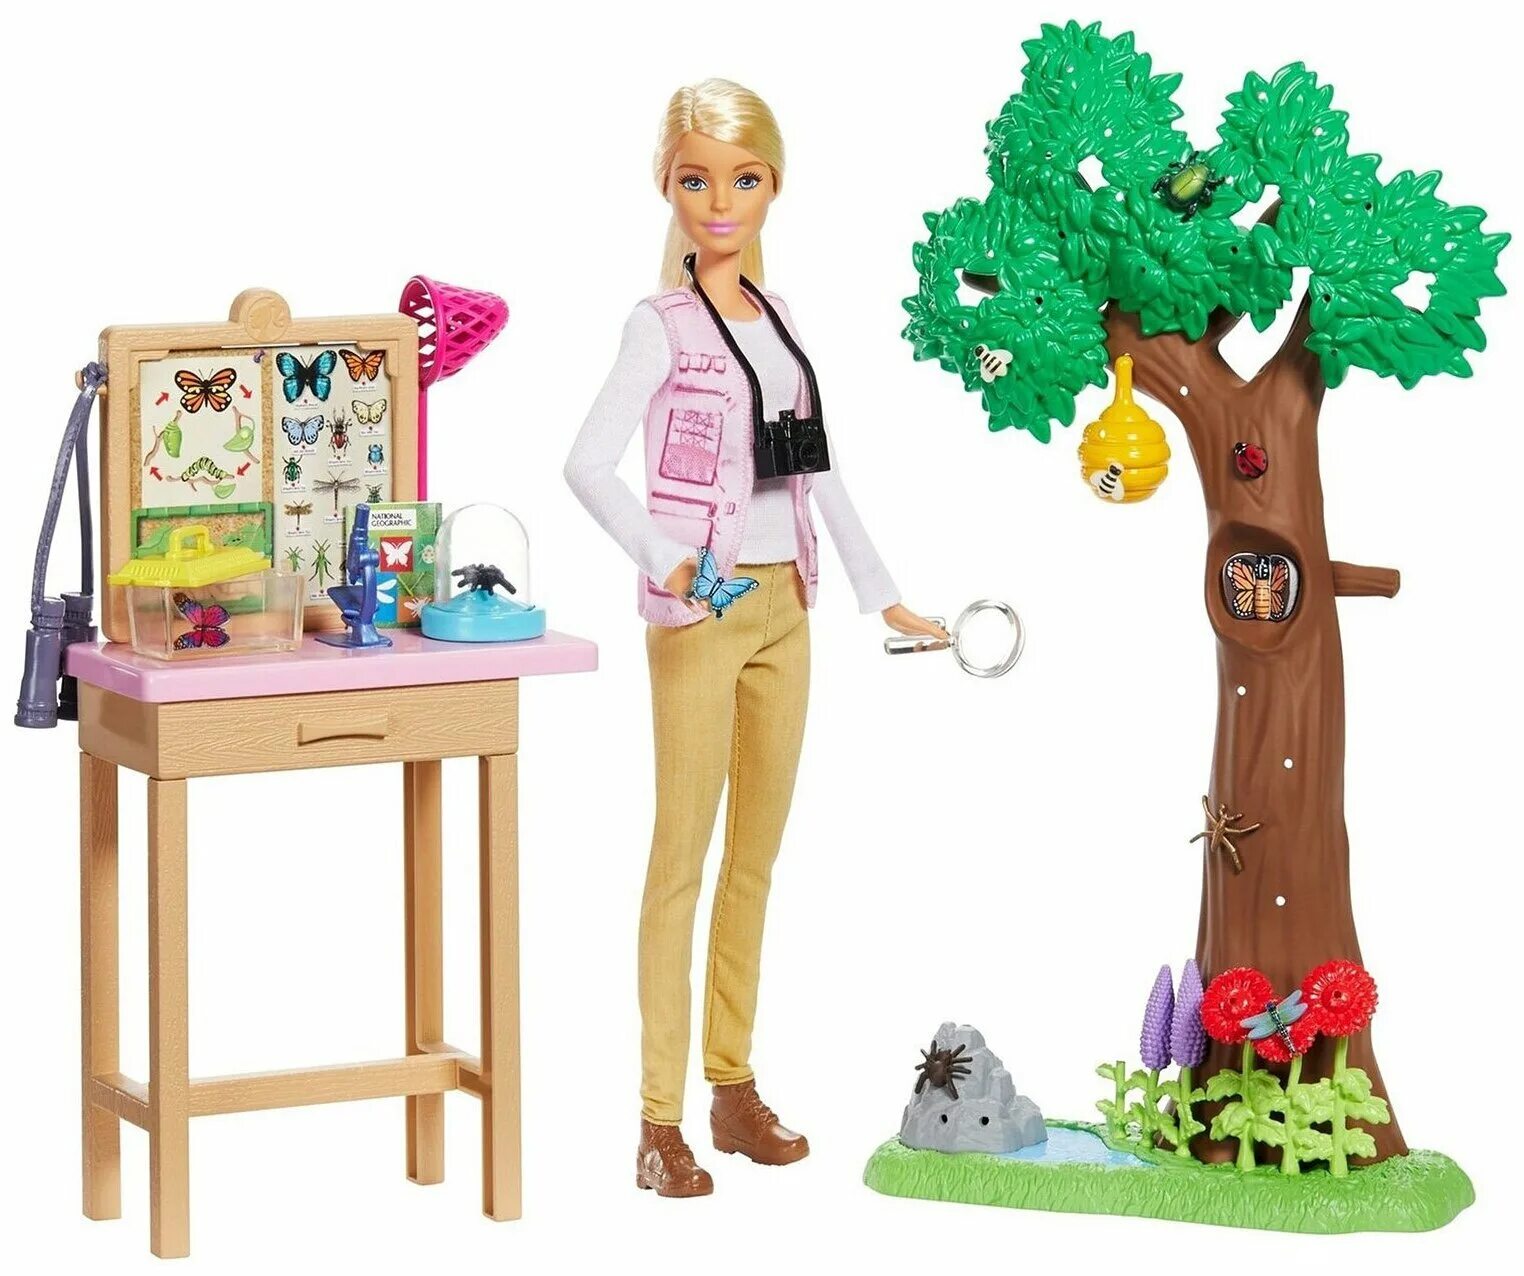 Большой набор кукол. Барби National Geographic. Кукла Барби профессии. Кукла Барби игровой набор "ветеринар на ферме" (Barbie careers Farm vet Doll & Playset). Барби ученый dvf50 fjb09.